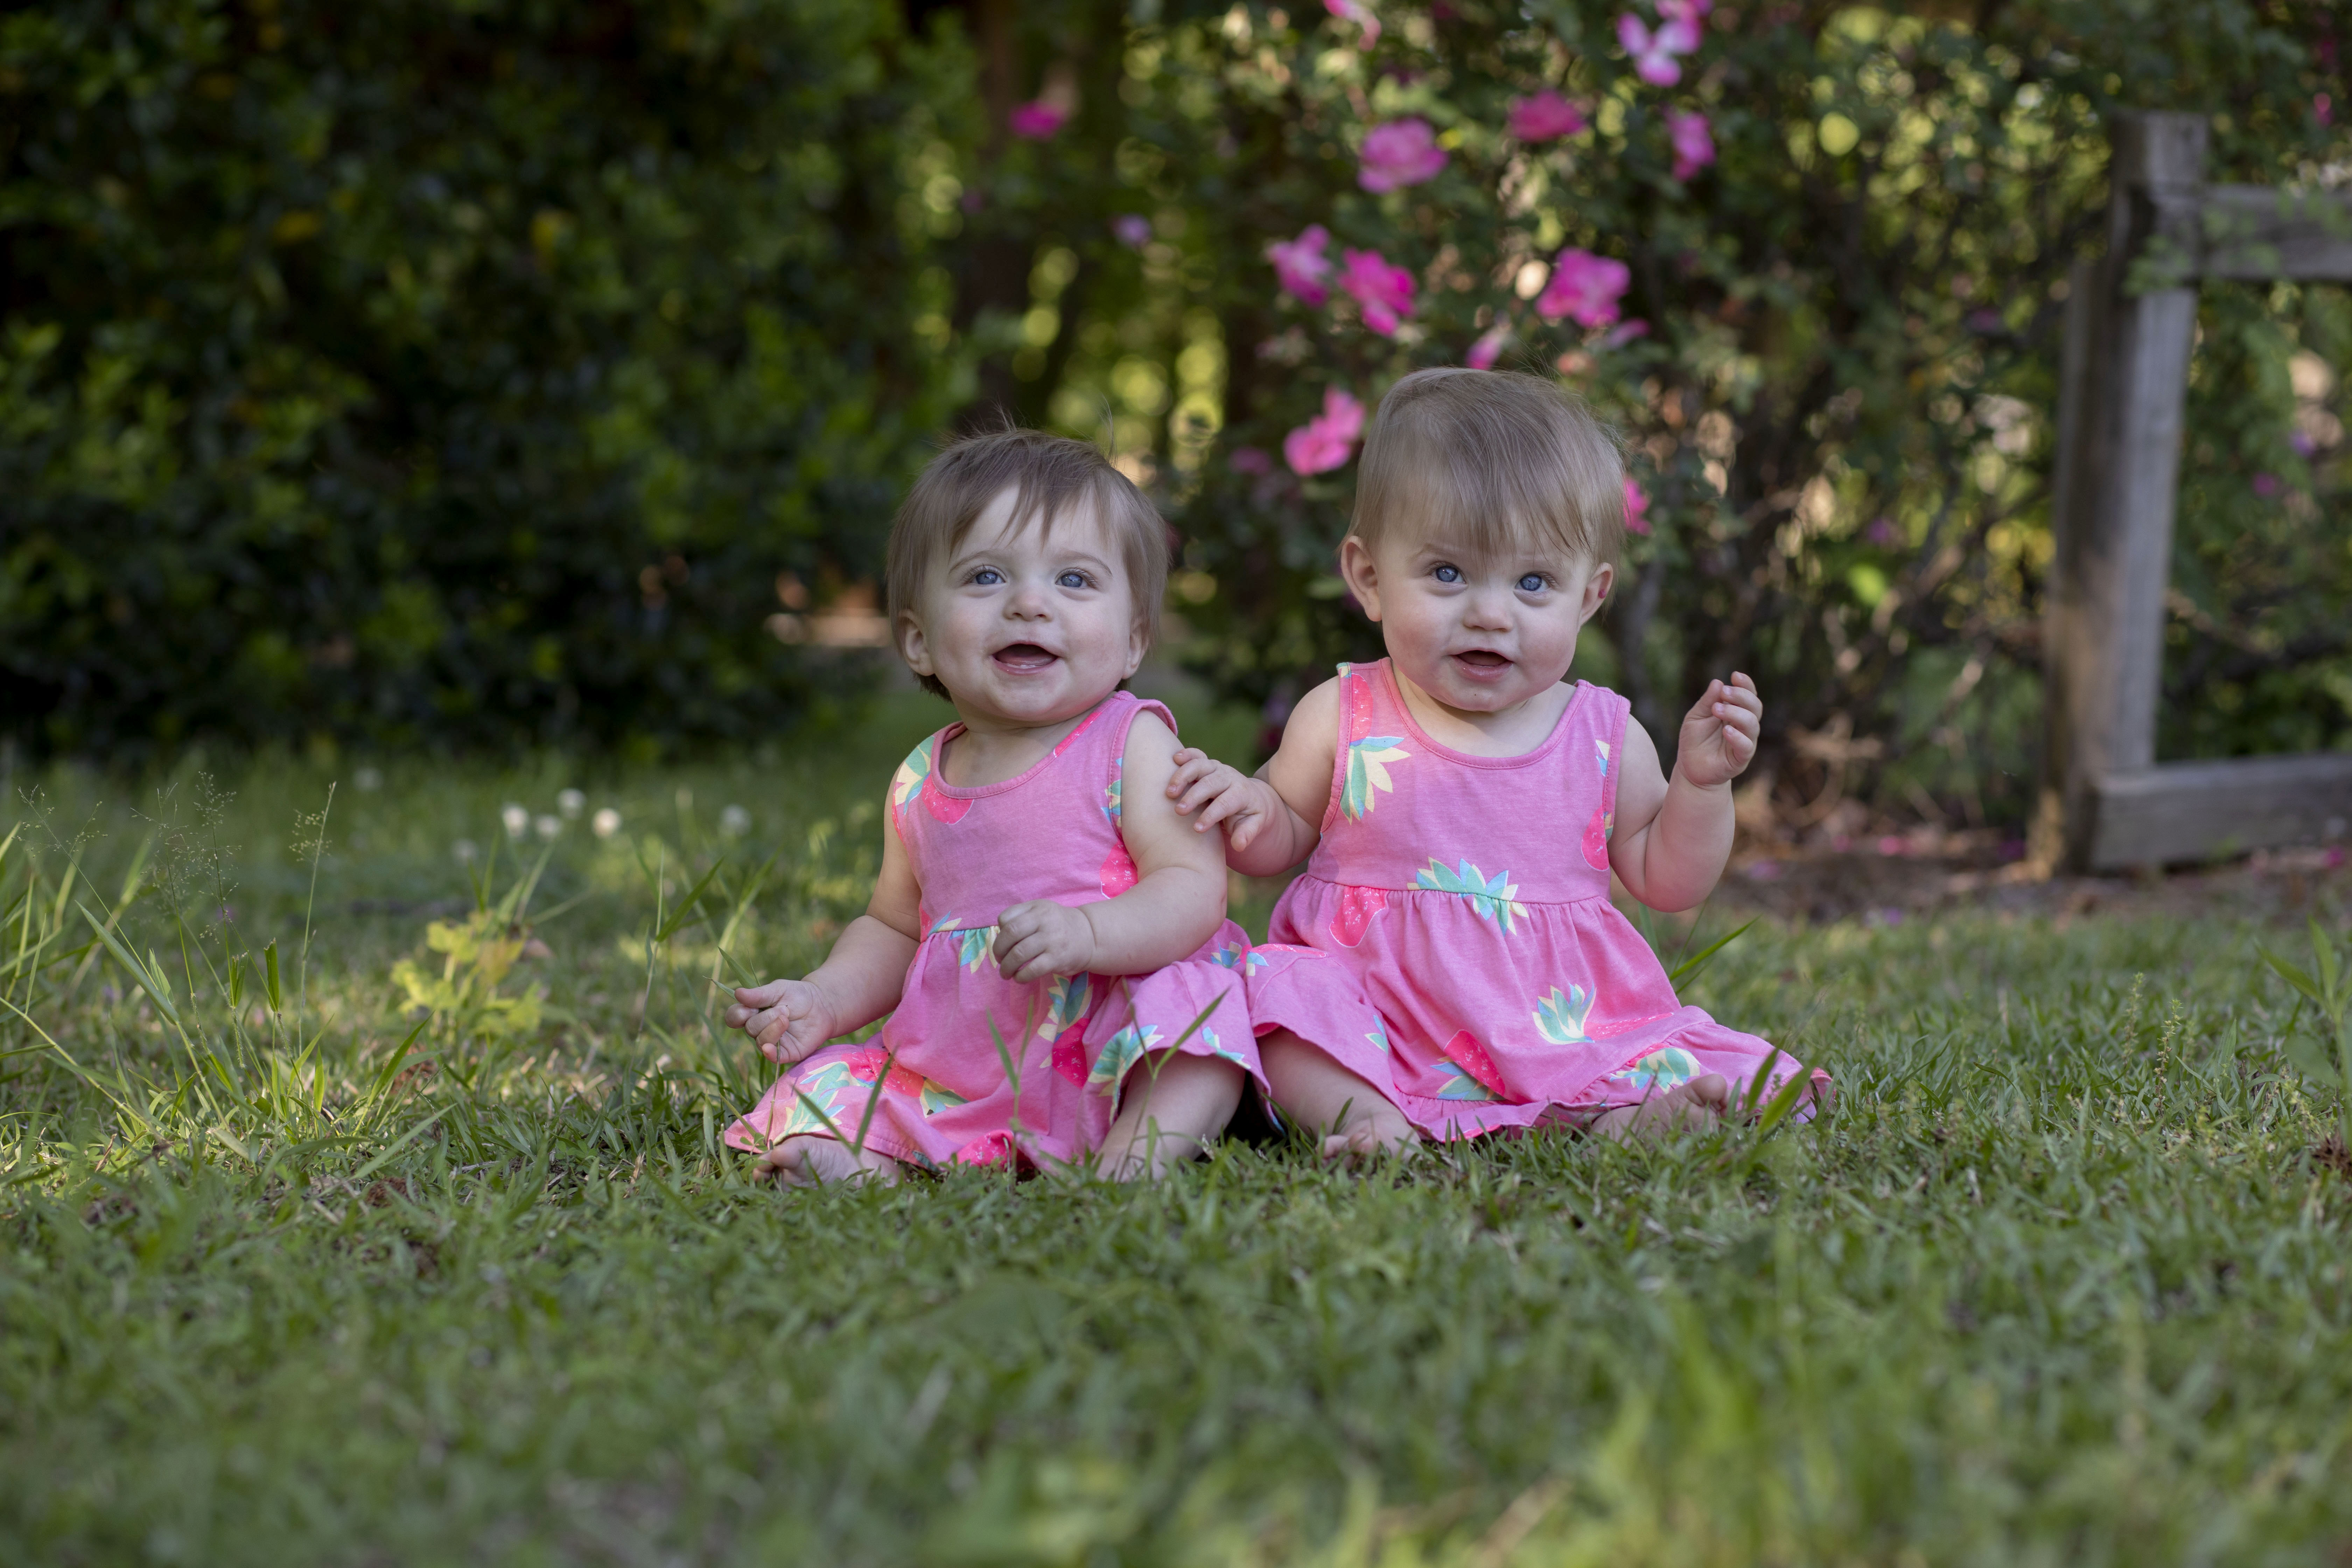 monroe photographer a focused life photography twins first birthday smash cake dacula ga milestone outdoors girls